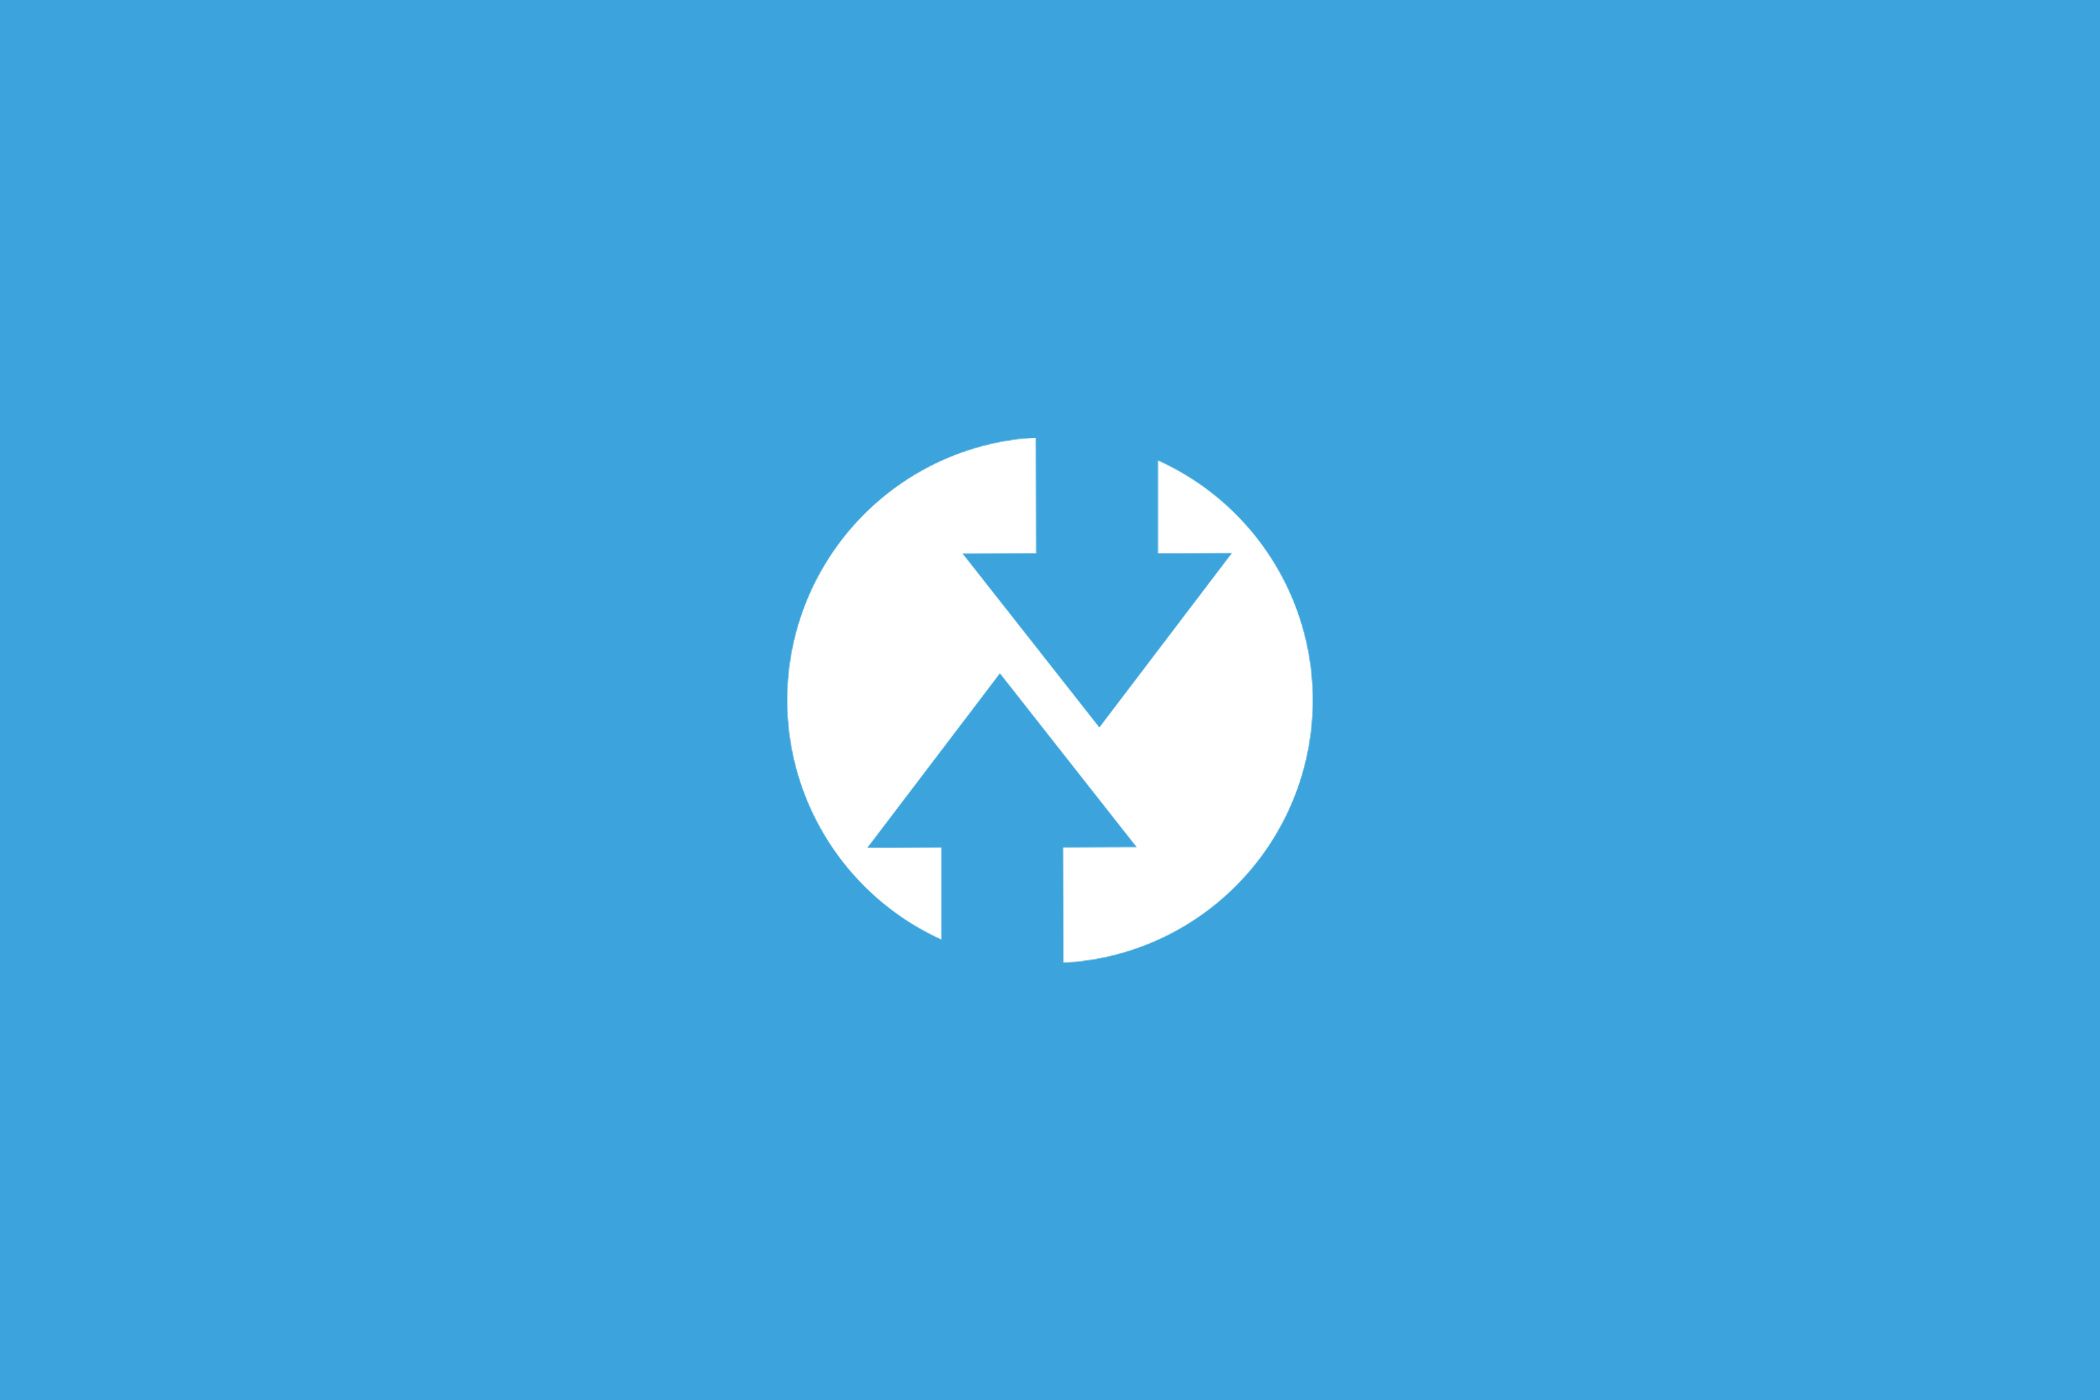 TWRP logo on blue background.